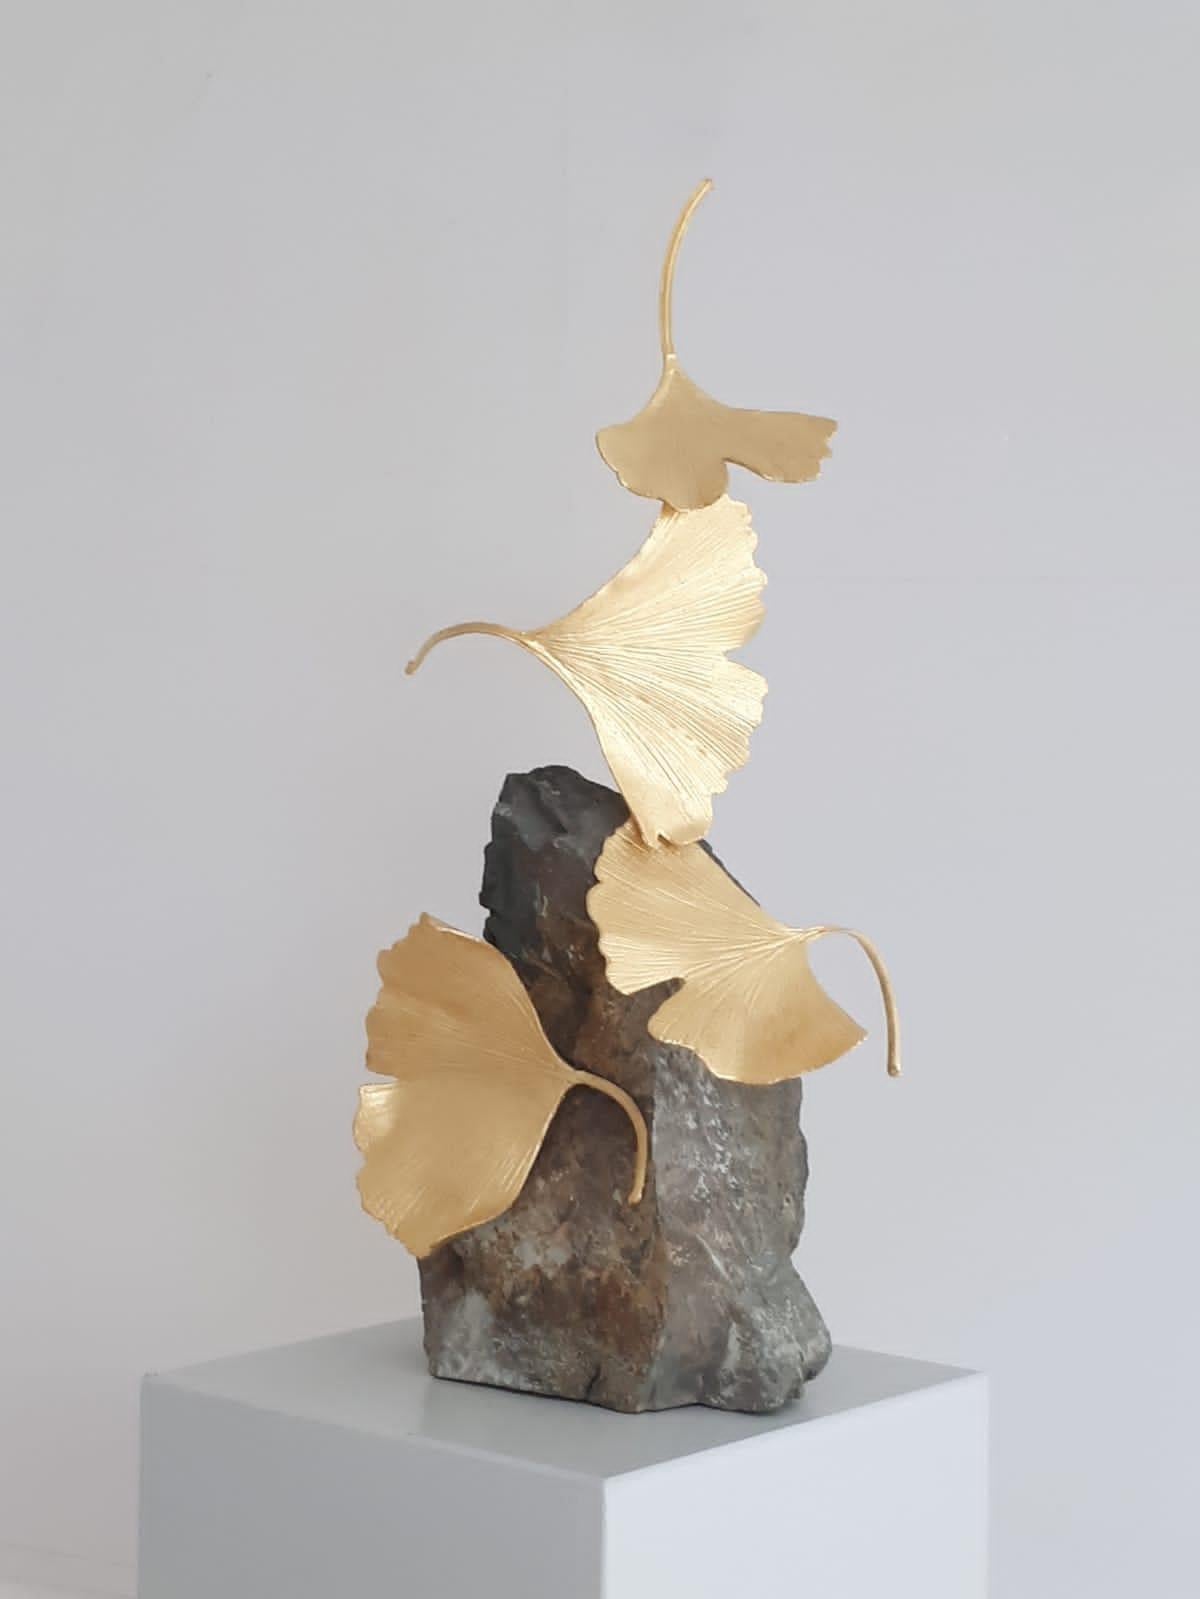 Gingko à 4 feuilles en pierre de Kuno Vollet - sculpture Gingko en laiton doré sur base en pierre